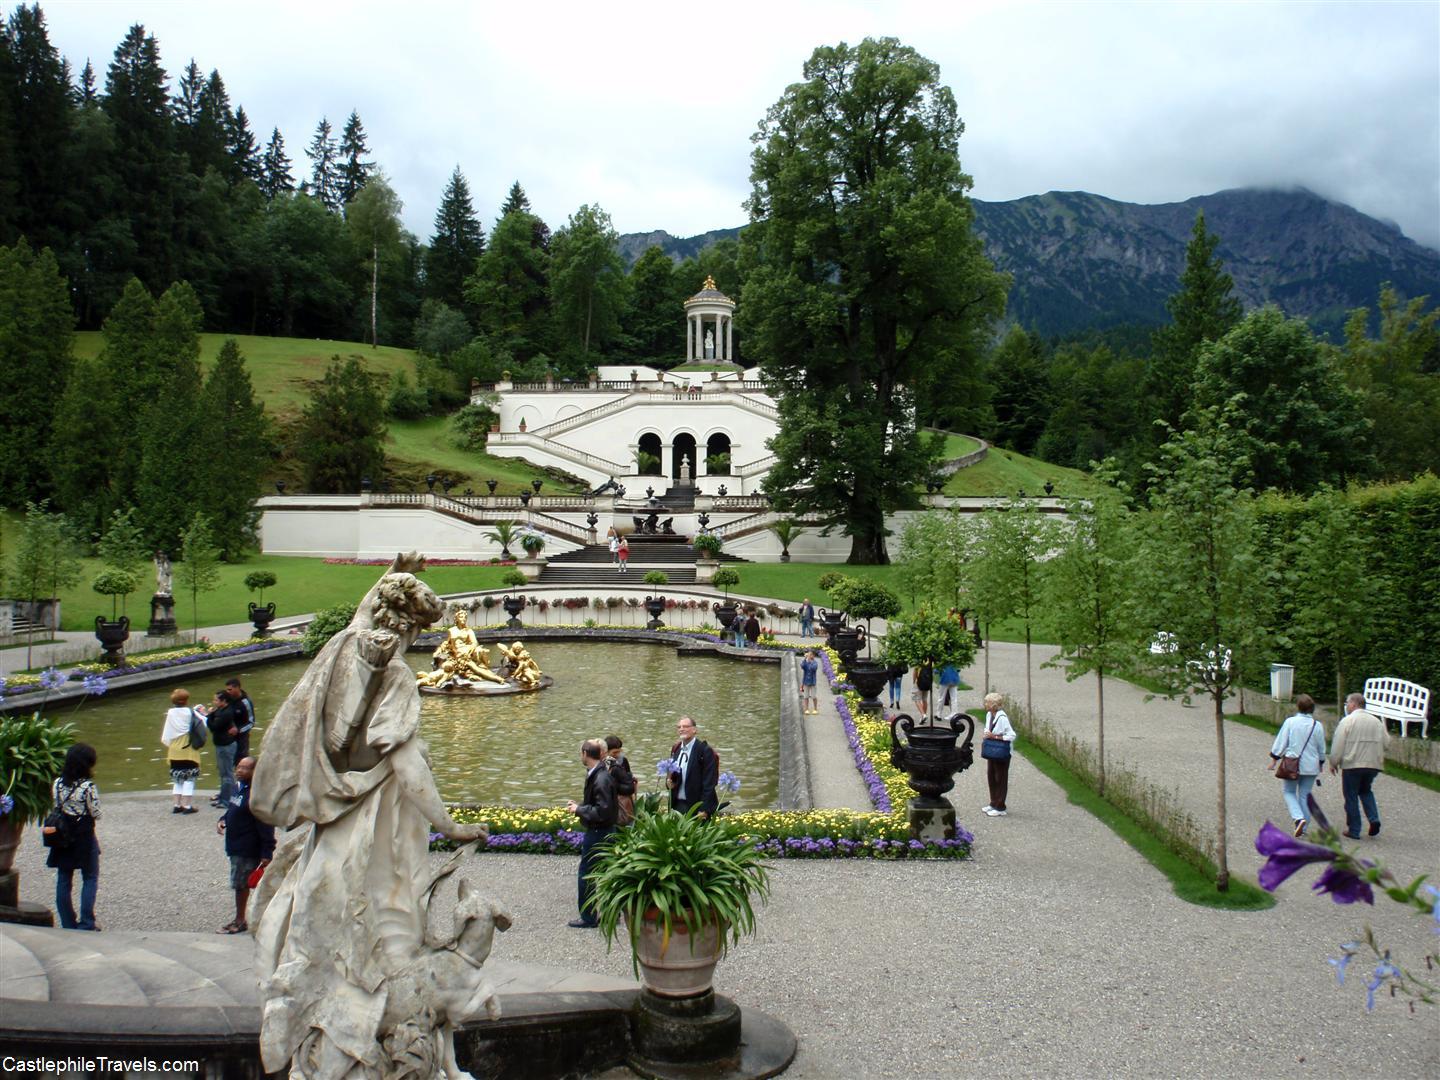 The gardens at Linderhof Palace